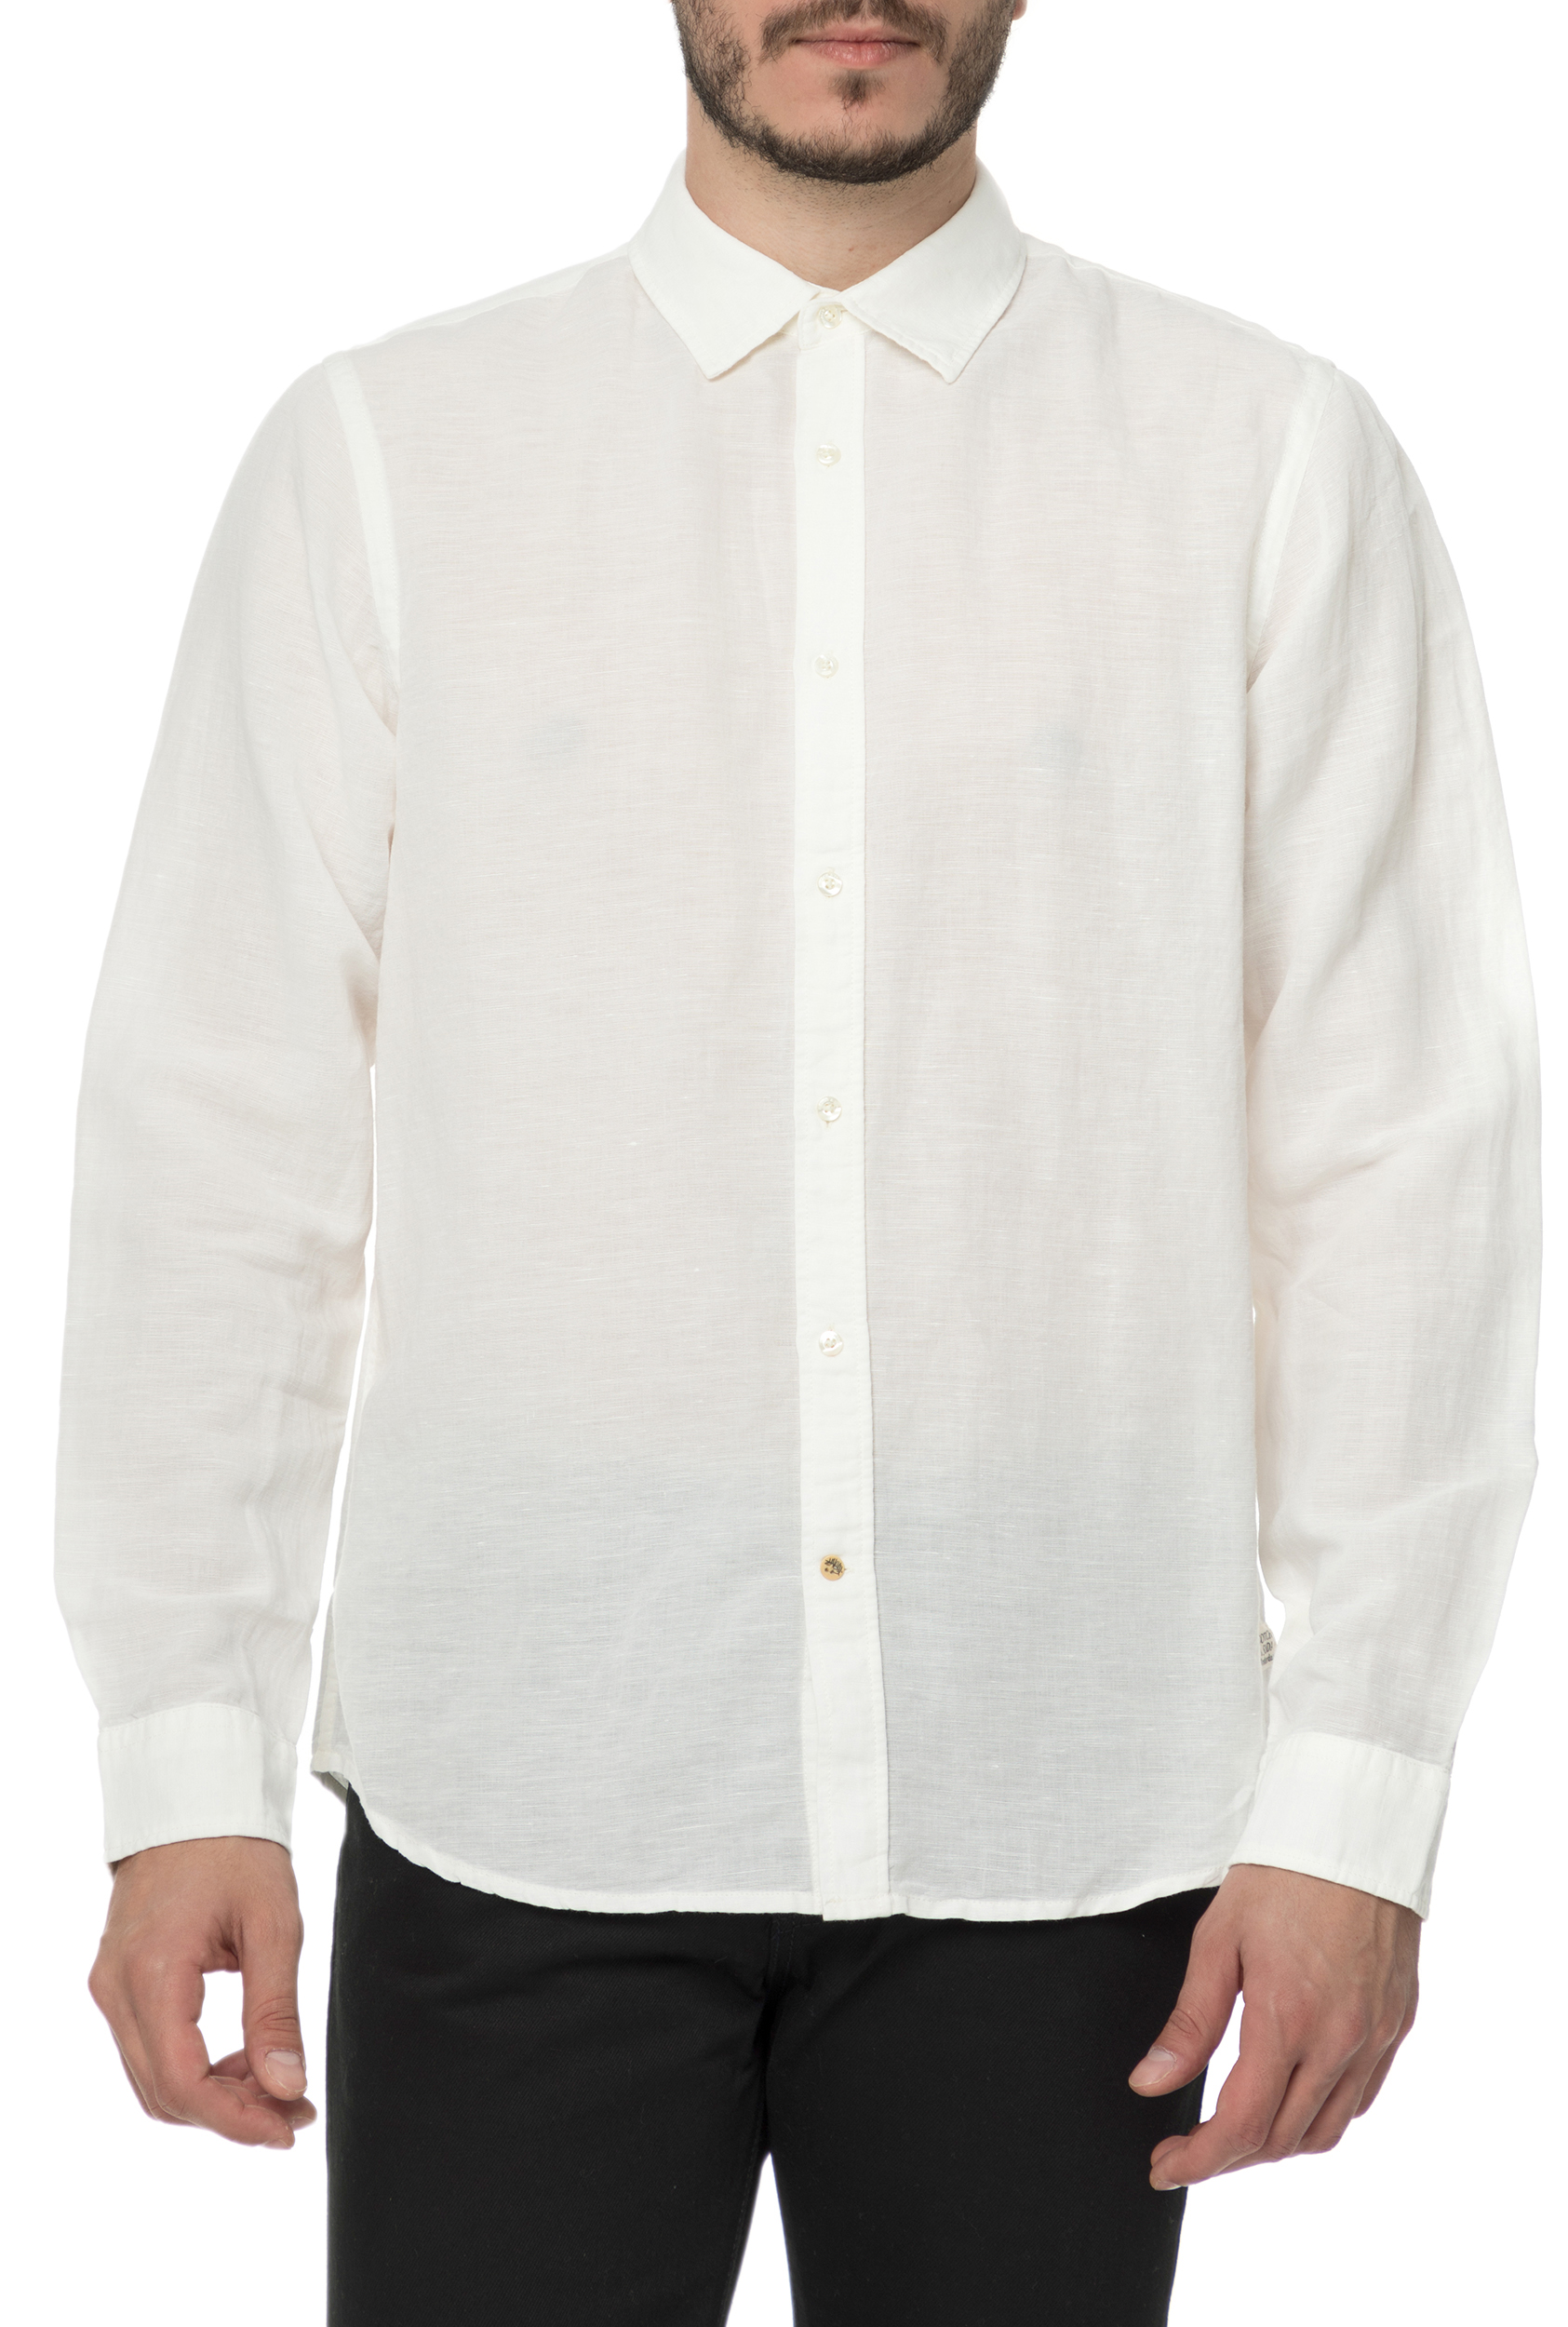 SCOTCH & SODA SCOTCH & SODA - Ανδρικό μακρυμάνικο πουκάμισο SCOTCH & SODA λευκή